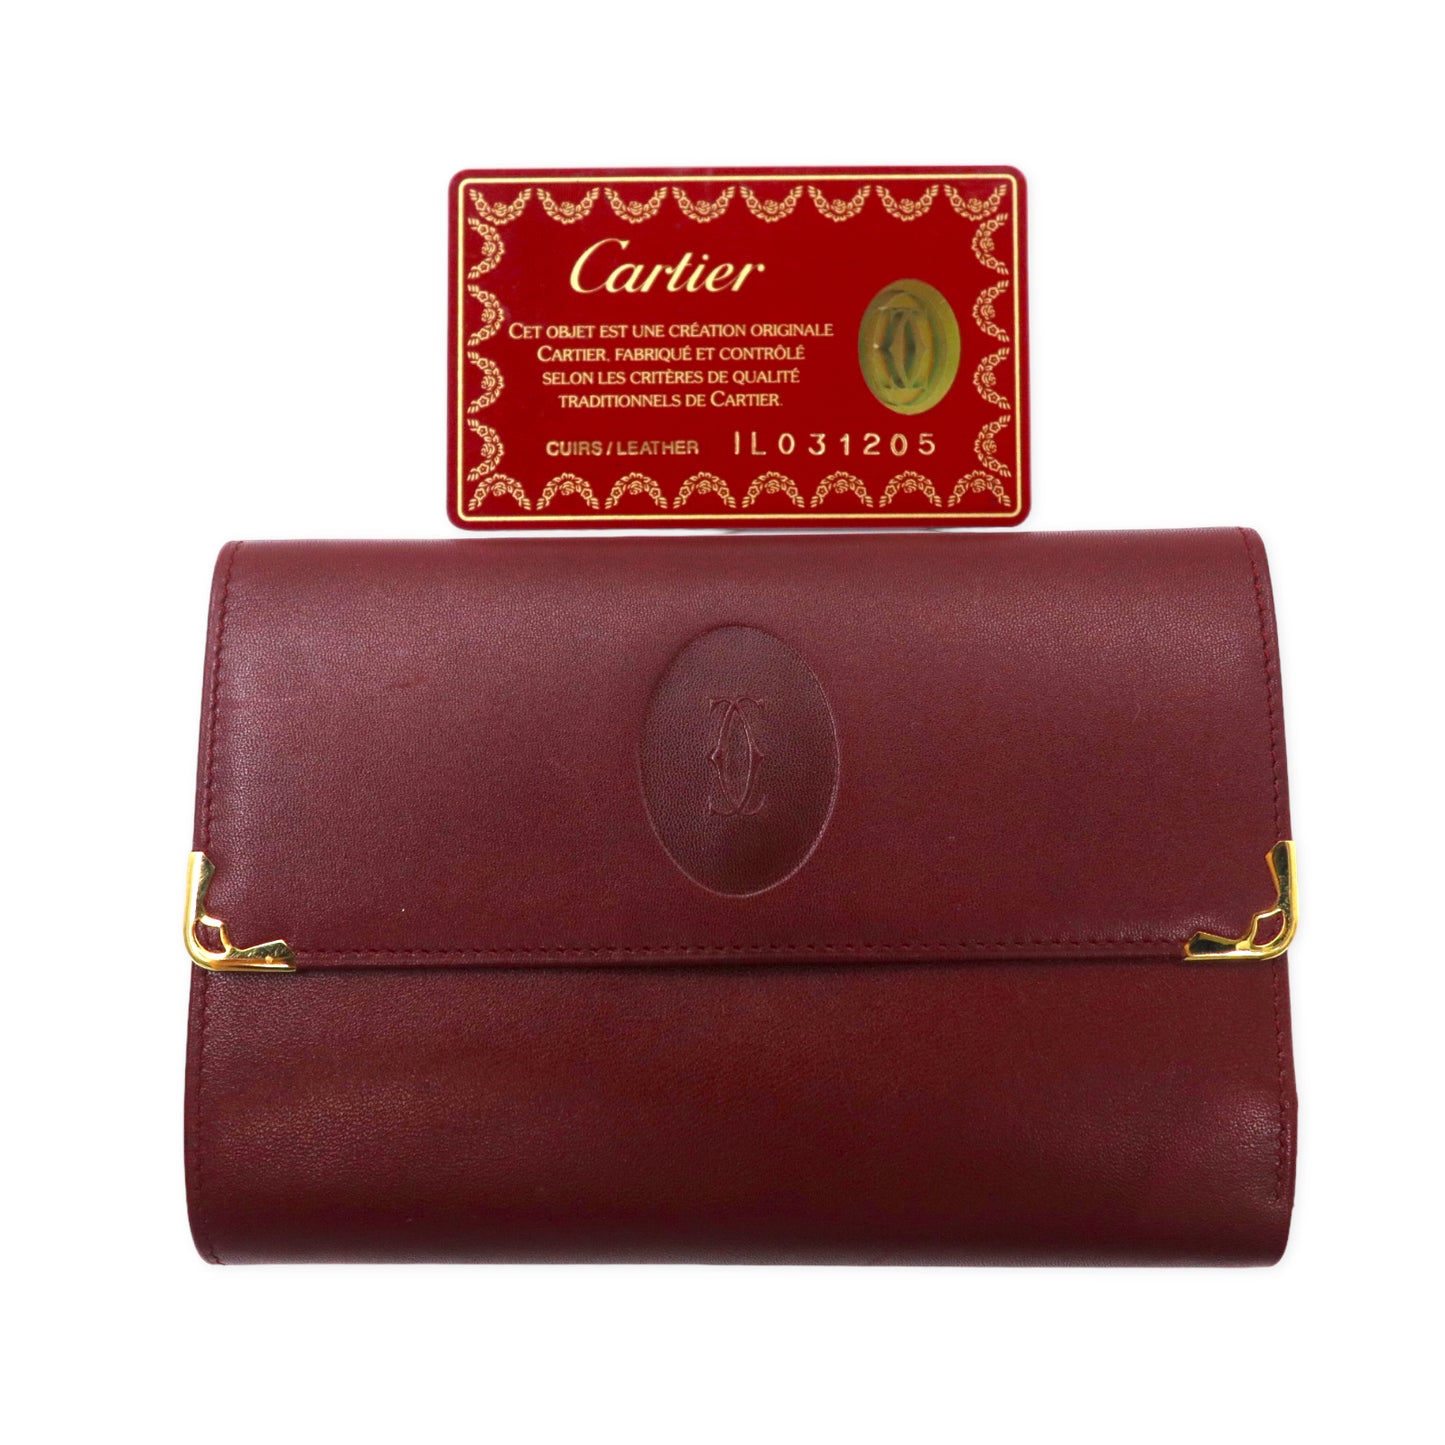 Cartier マストライン 3つ折り財布 ボルドー レザー がま口 オールド